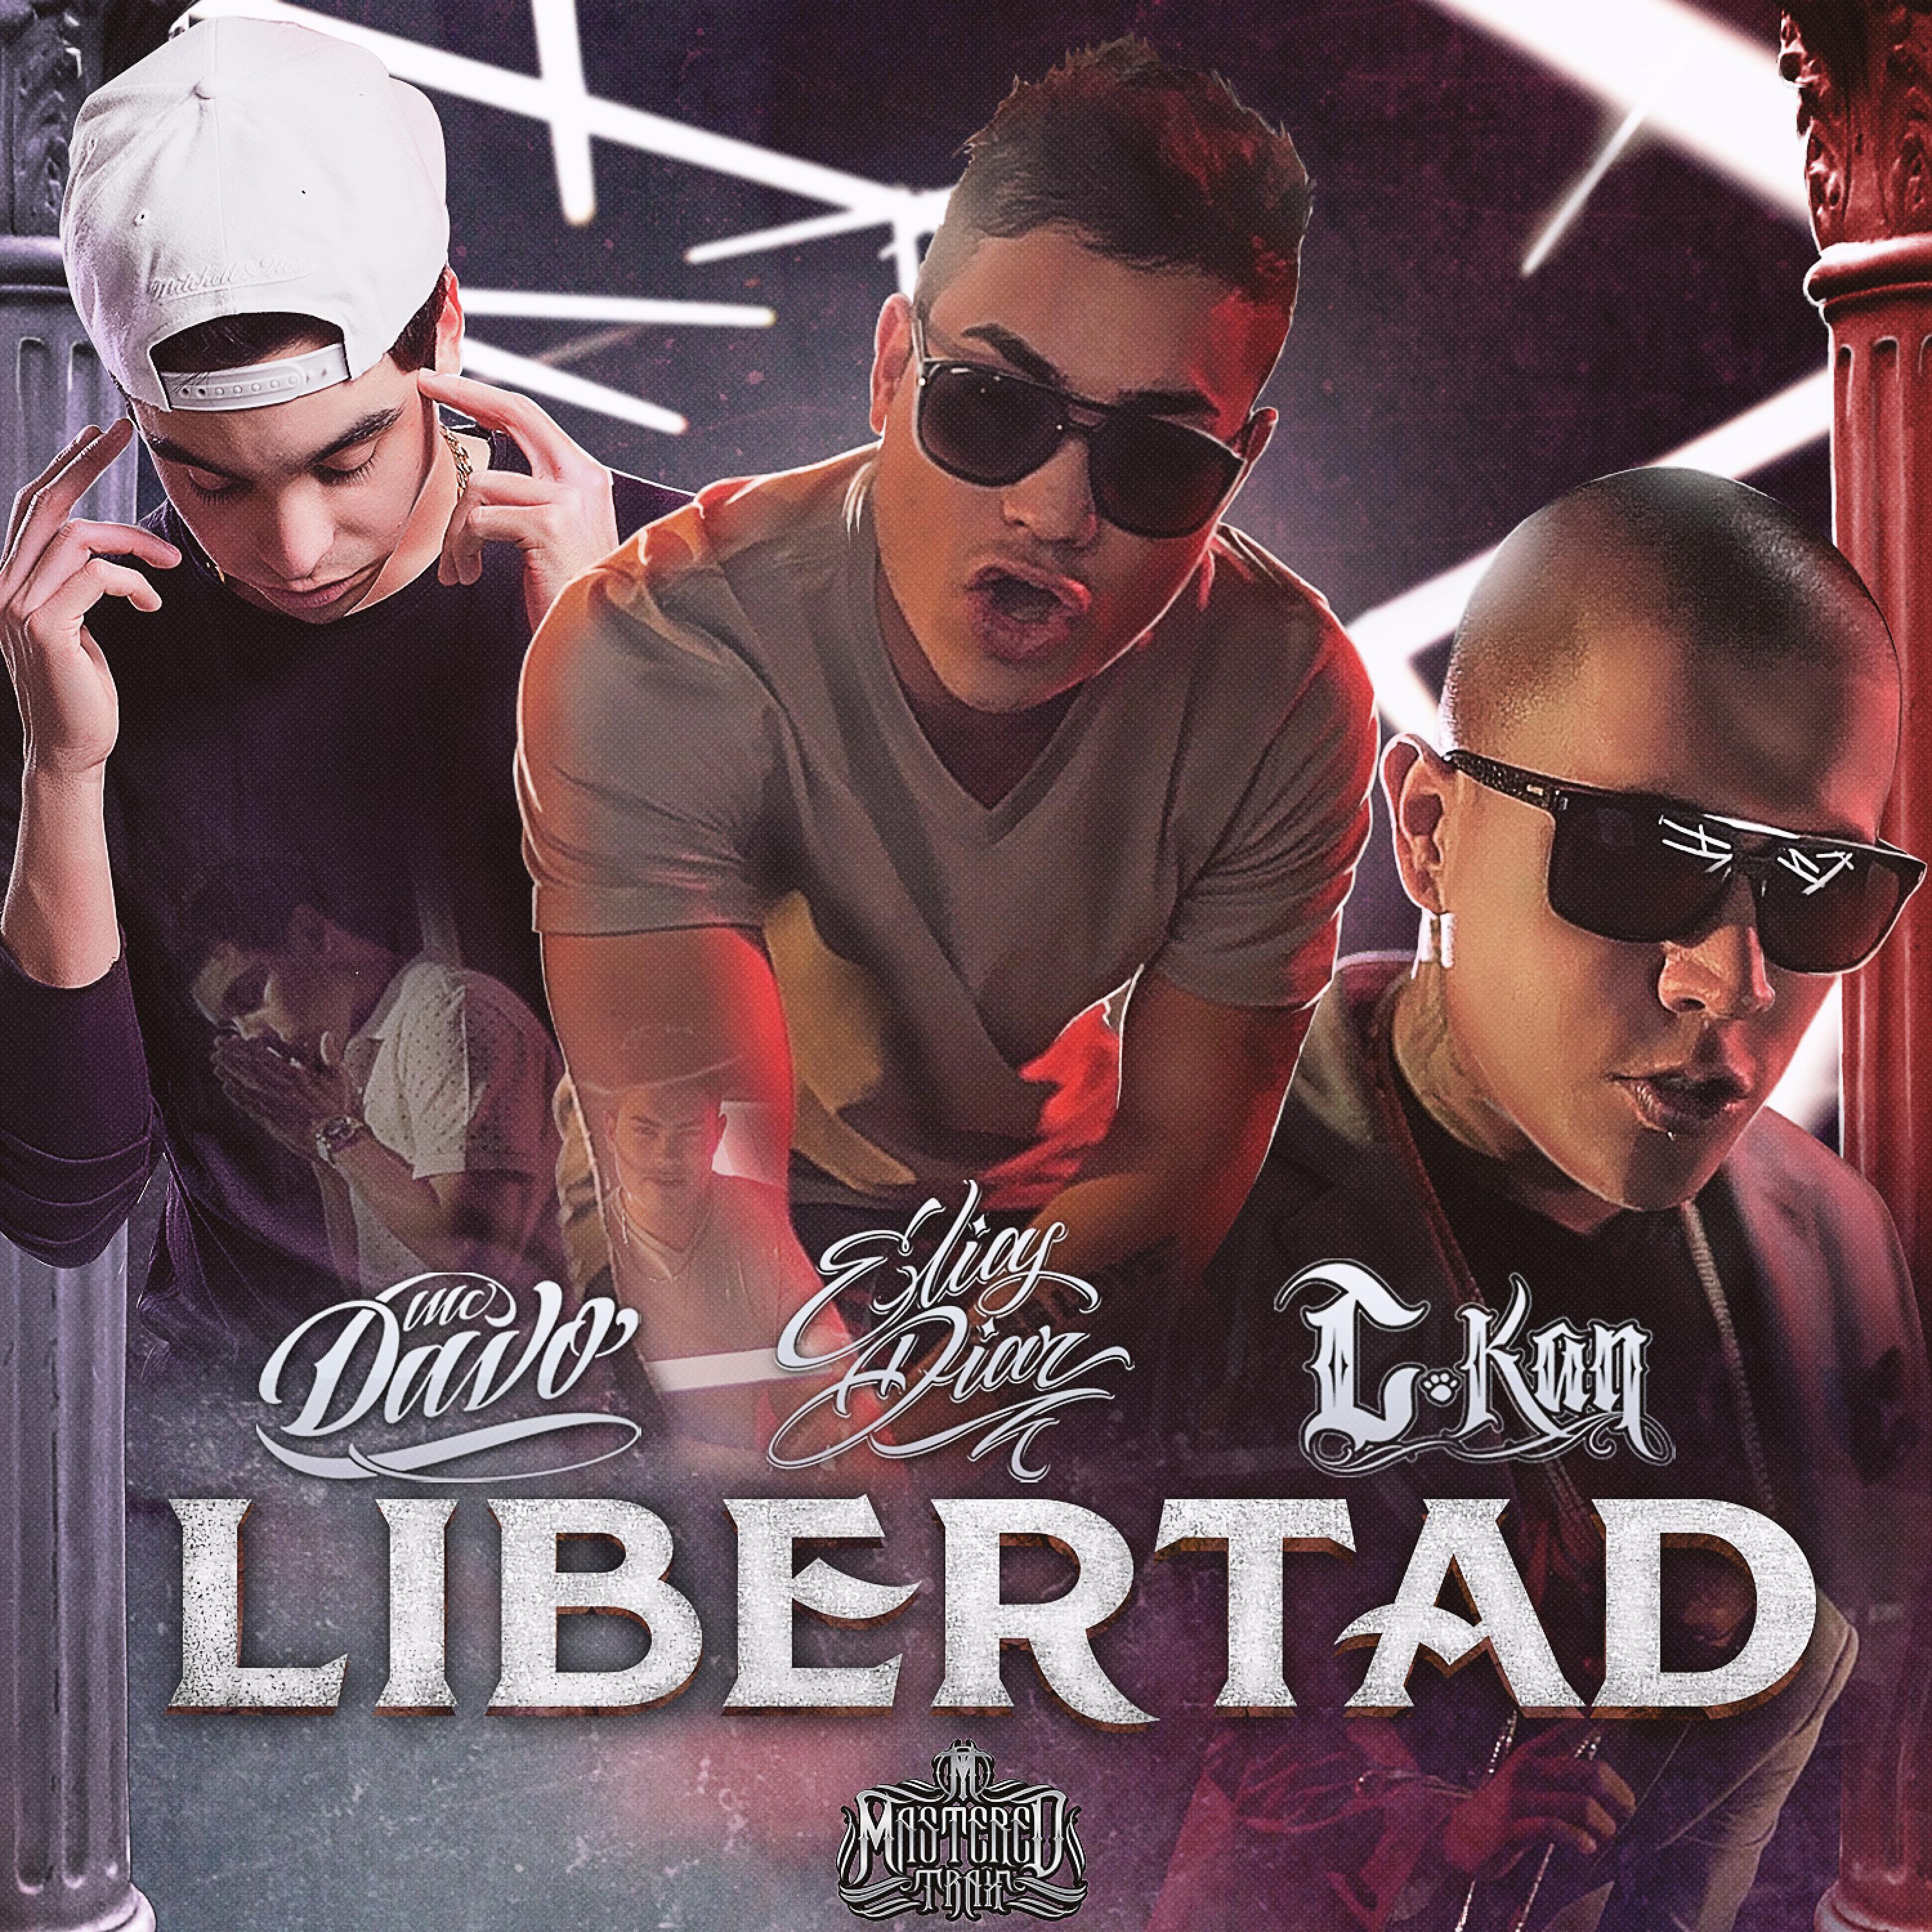 Libertad (feat. MC Davo & C-Kan) - Single